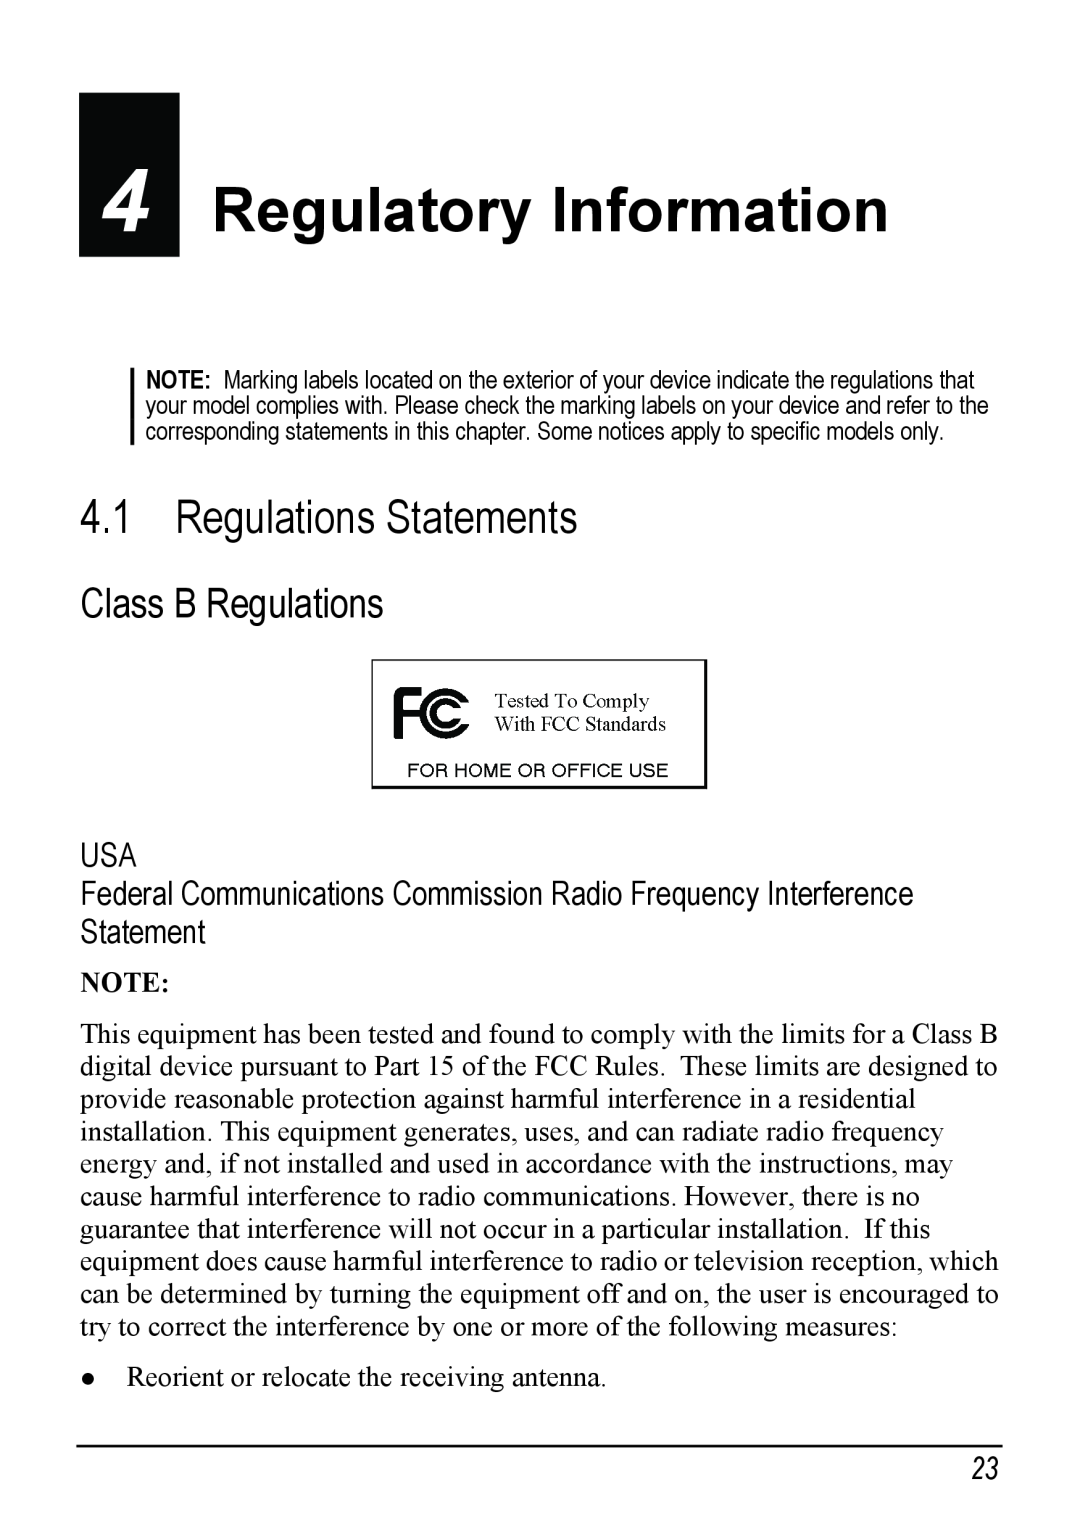 Jabra C220 manual Regulatory Information, Regulations Statements, Class B Regulations 